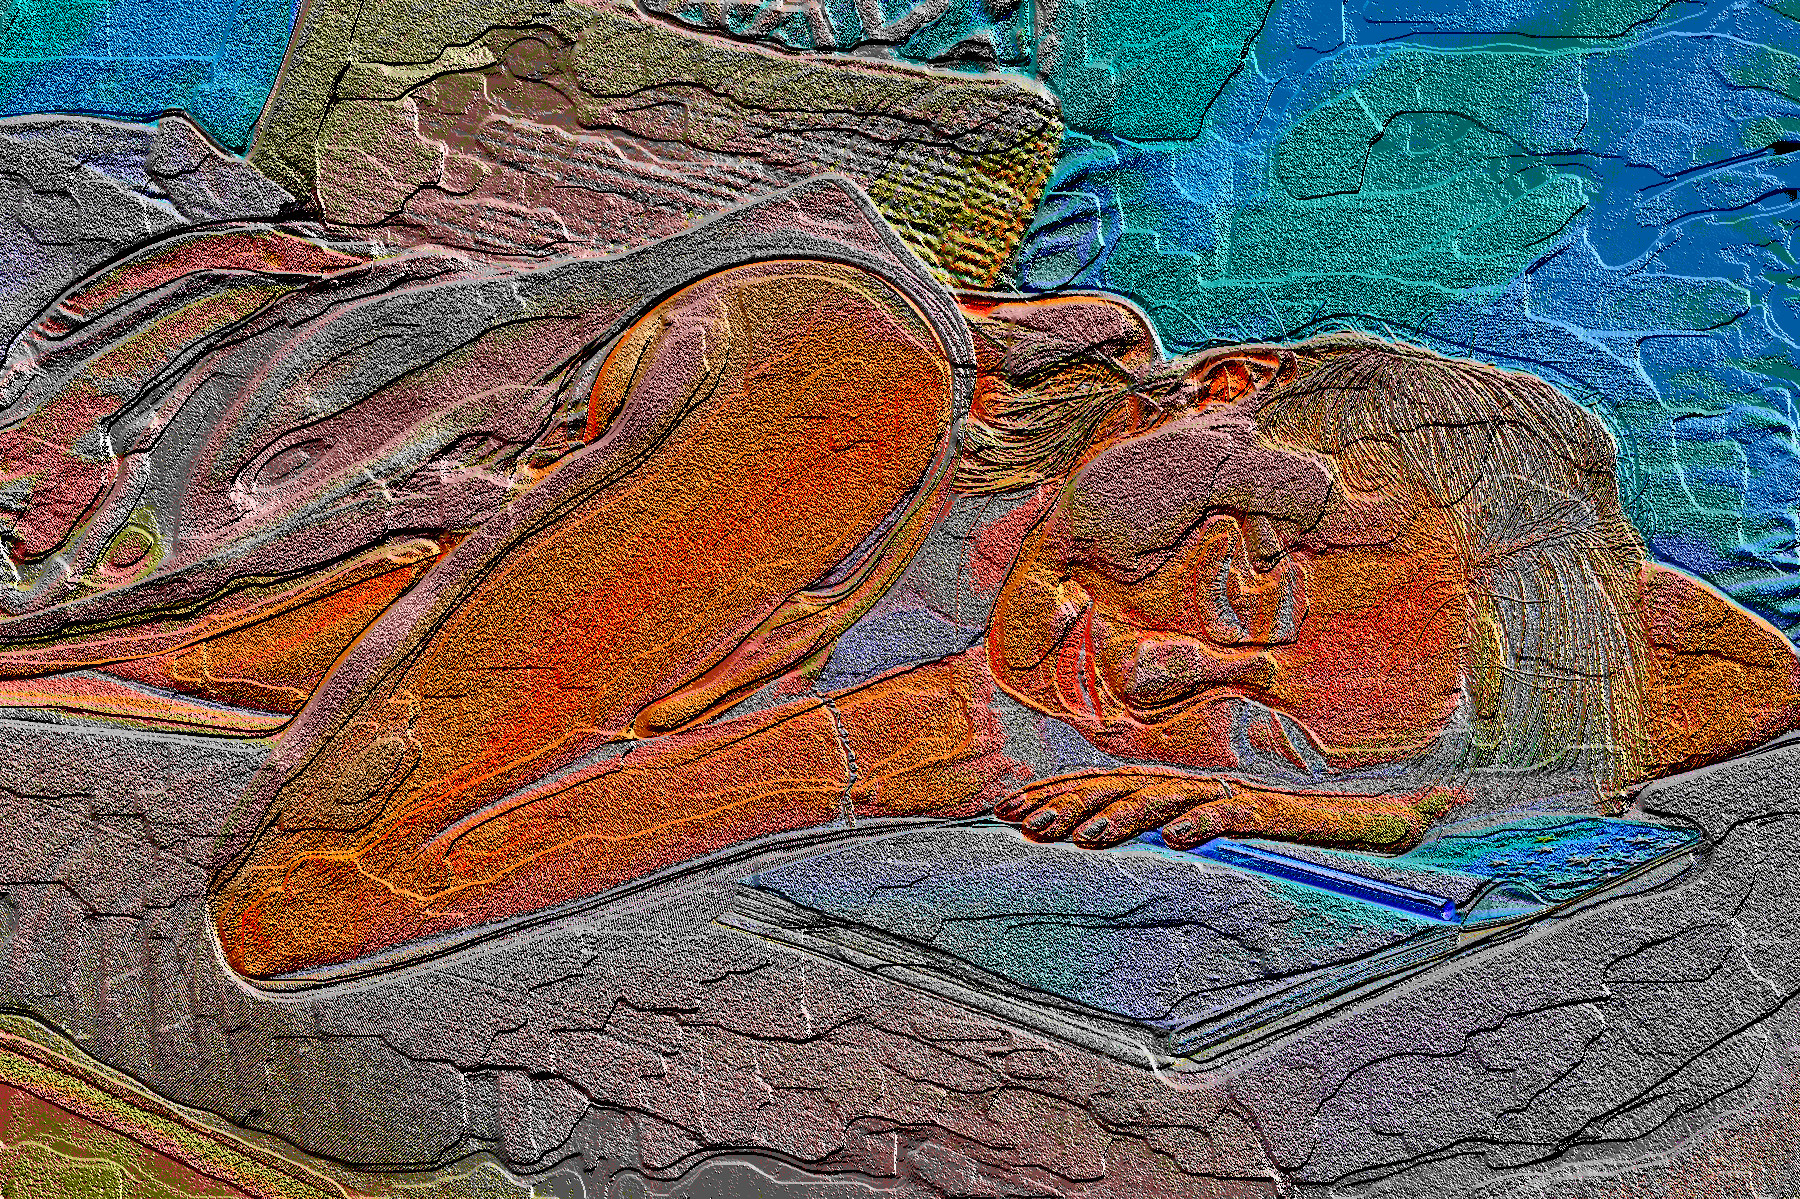 2021-04-10 09-01-31 pexels-anna-tarazevich-6711870 with effect P (BasReliefThruAnguishLO), , colours.jpeg